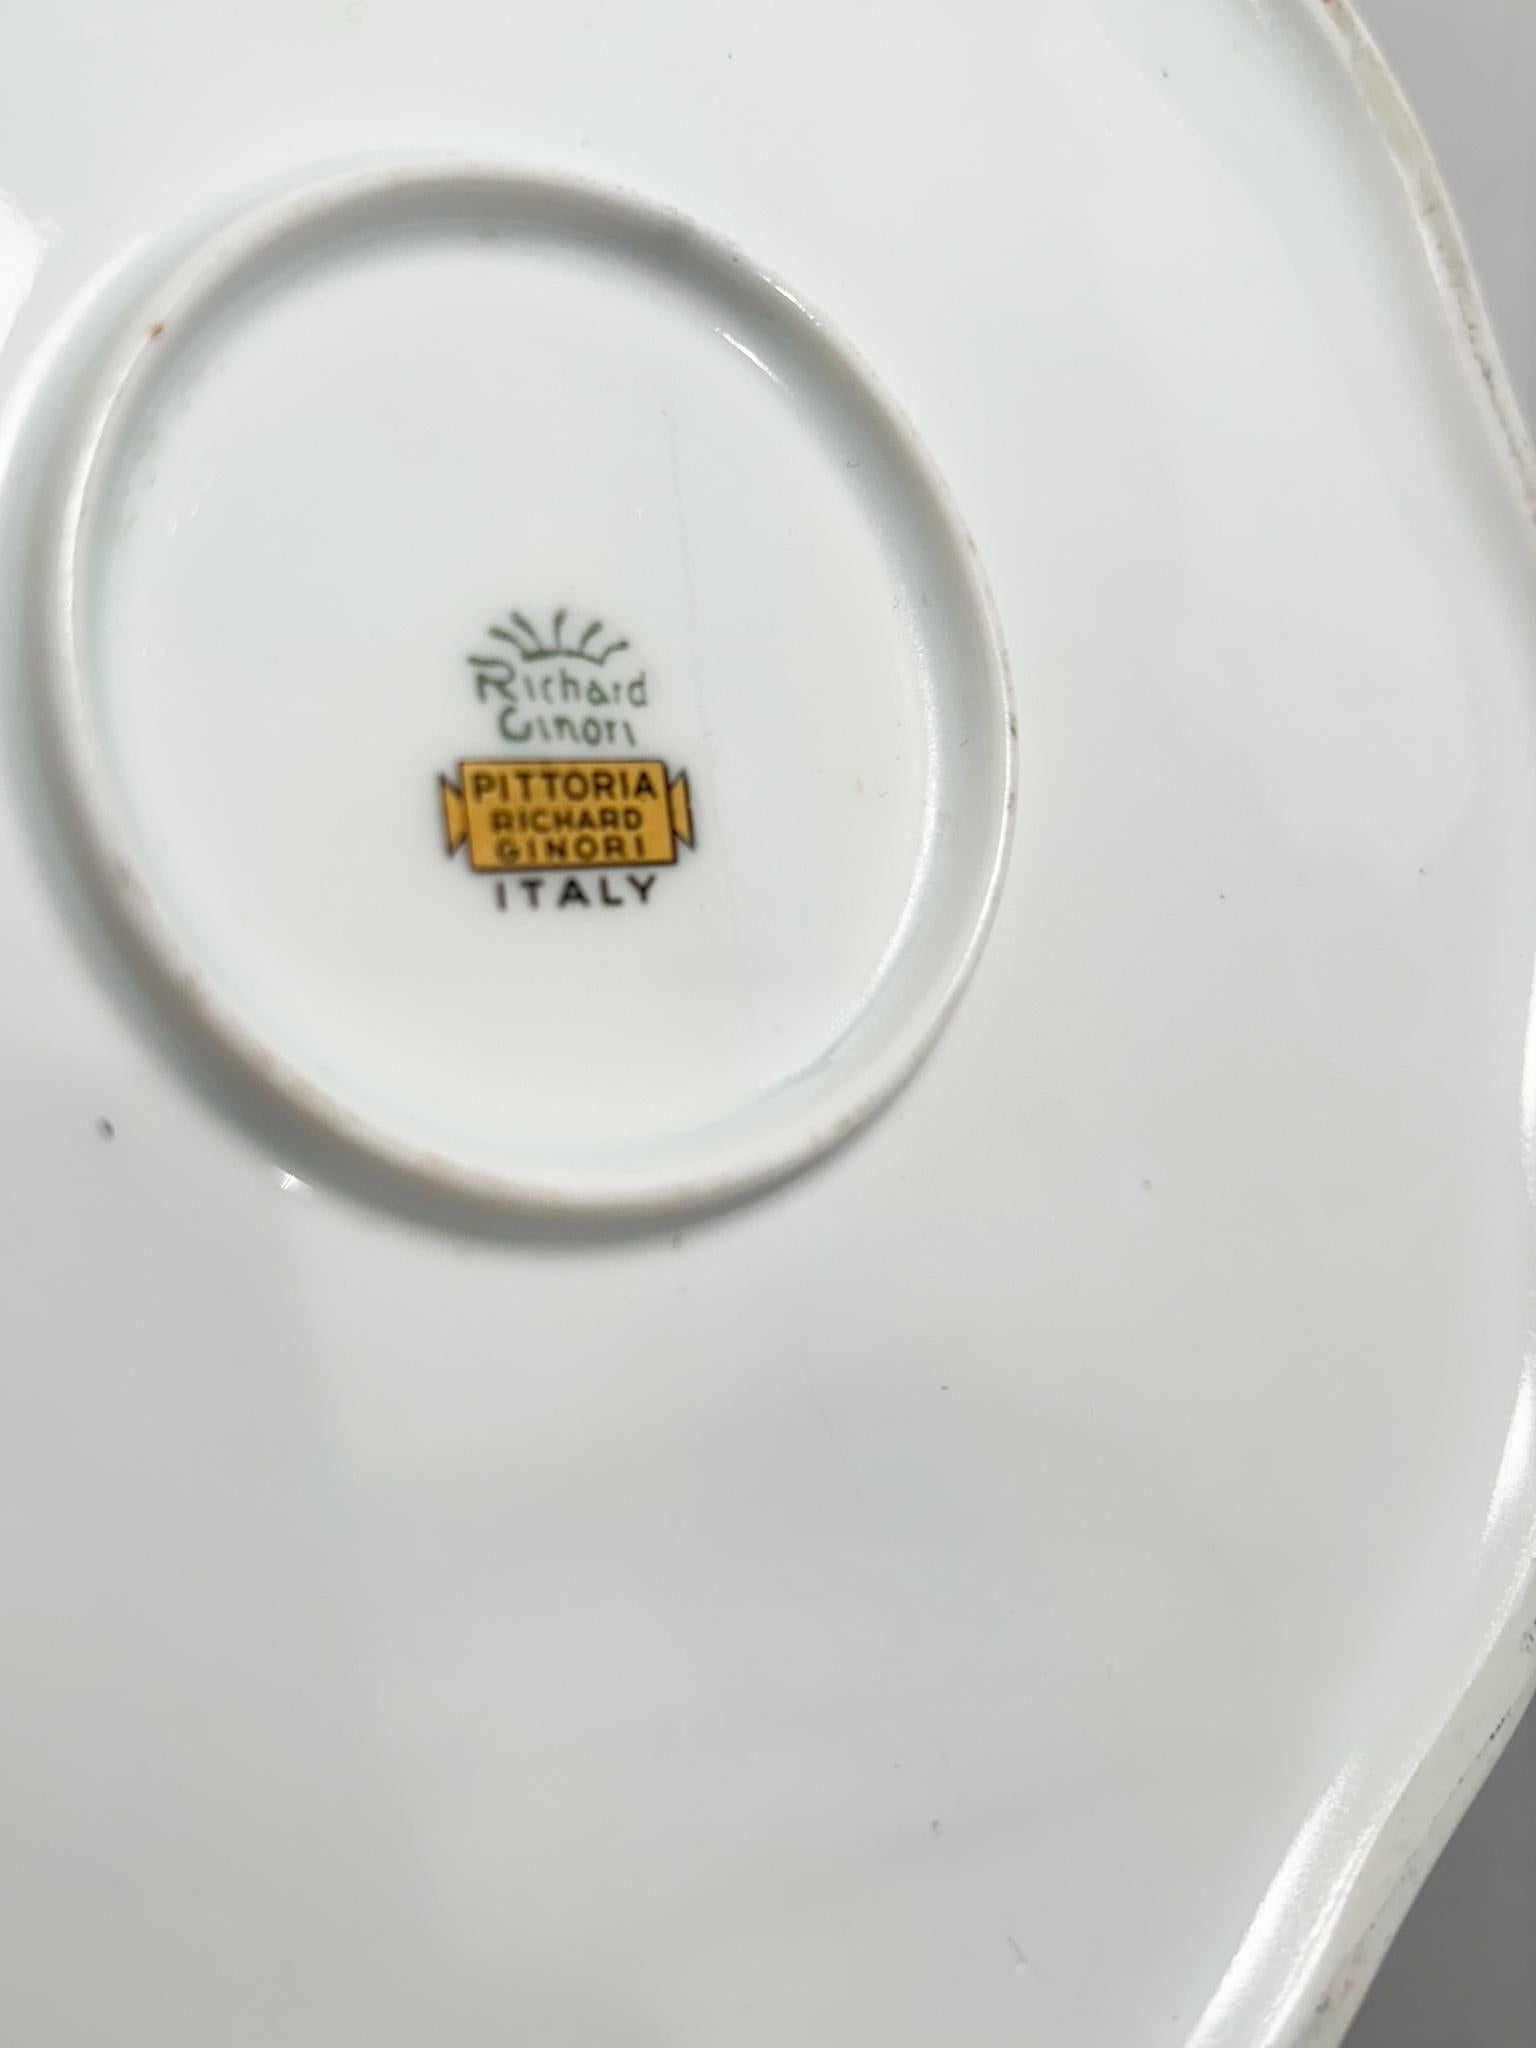 Ginori Doccia Porcelain Refresher Vase Galli Rossi Series 1950s For Sale 4